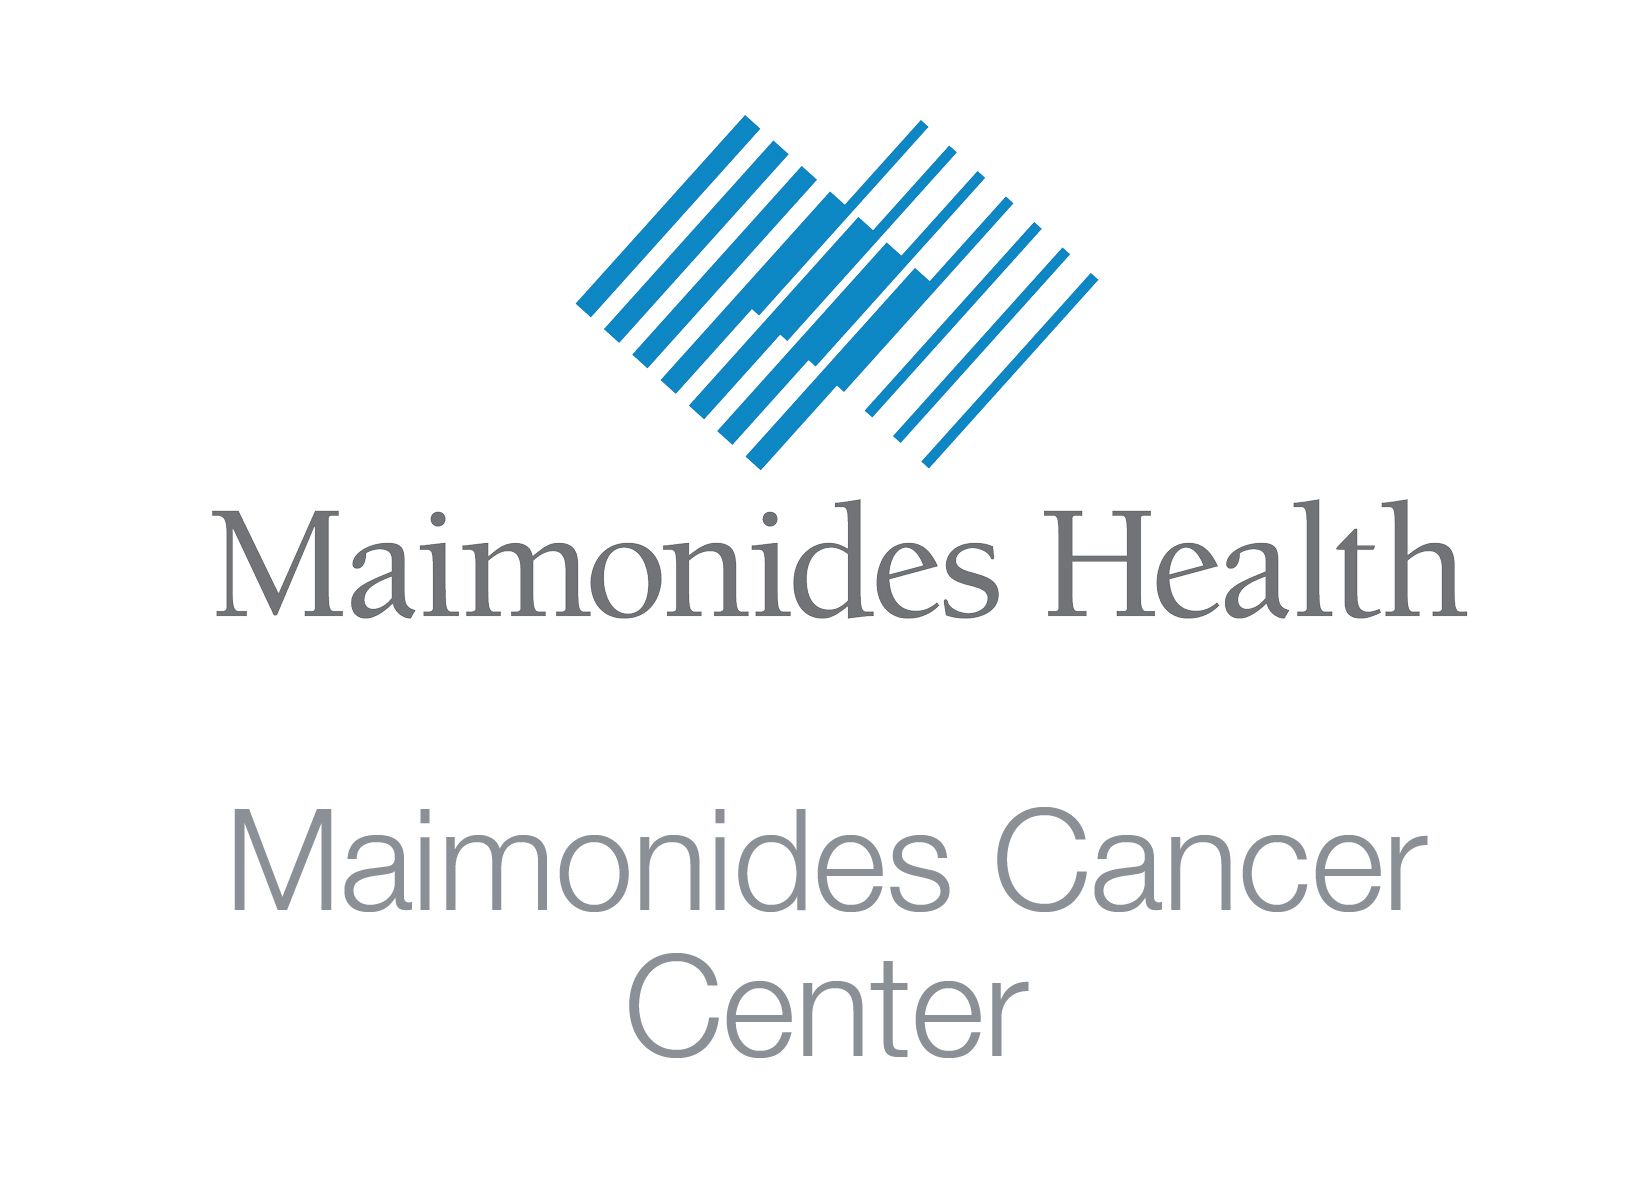 Maimonides Cancer Center